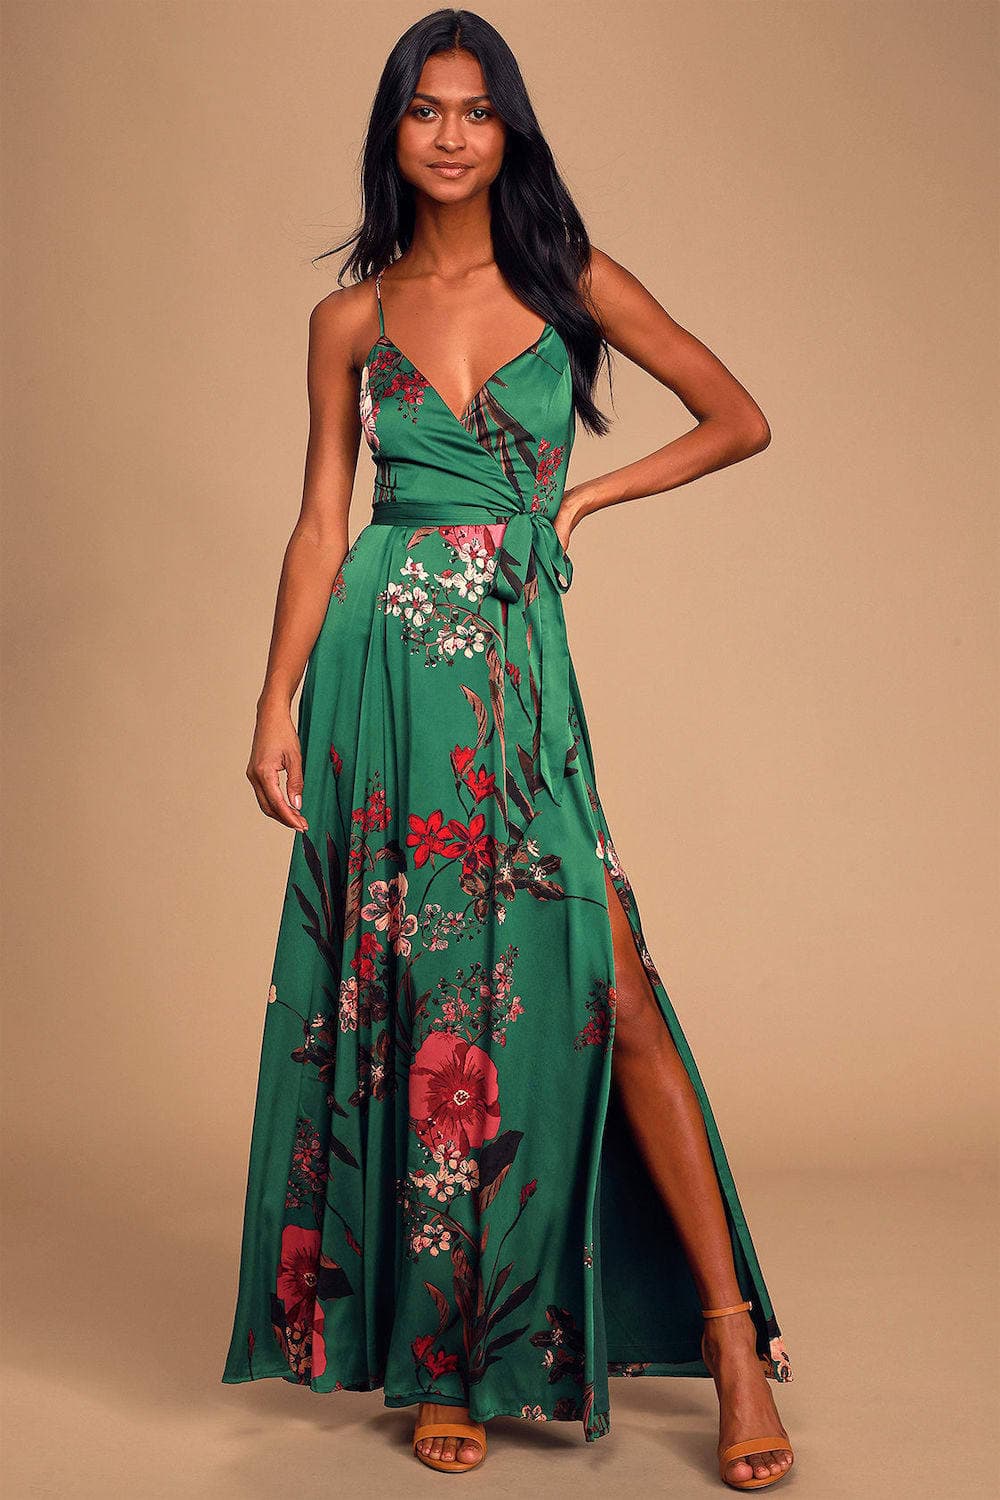 Lulus Still the One Emerald Green Floral Print Satin Maxi Dress - Stores similar to ASOS